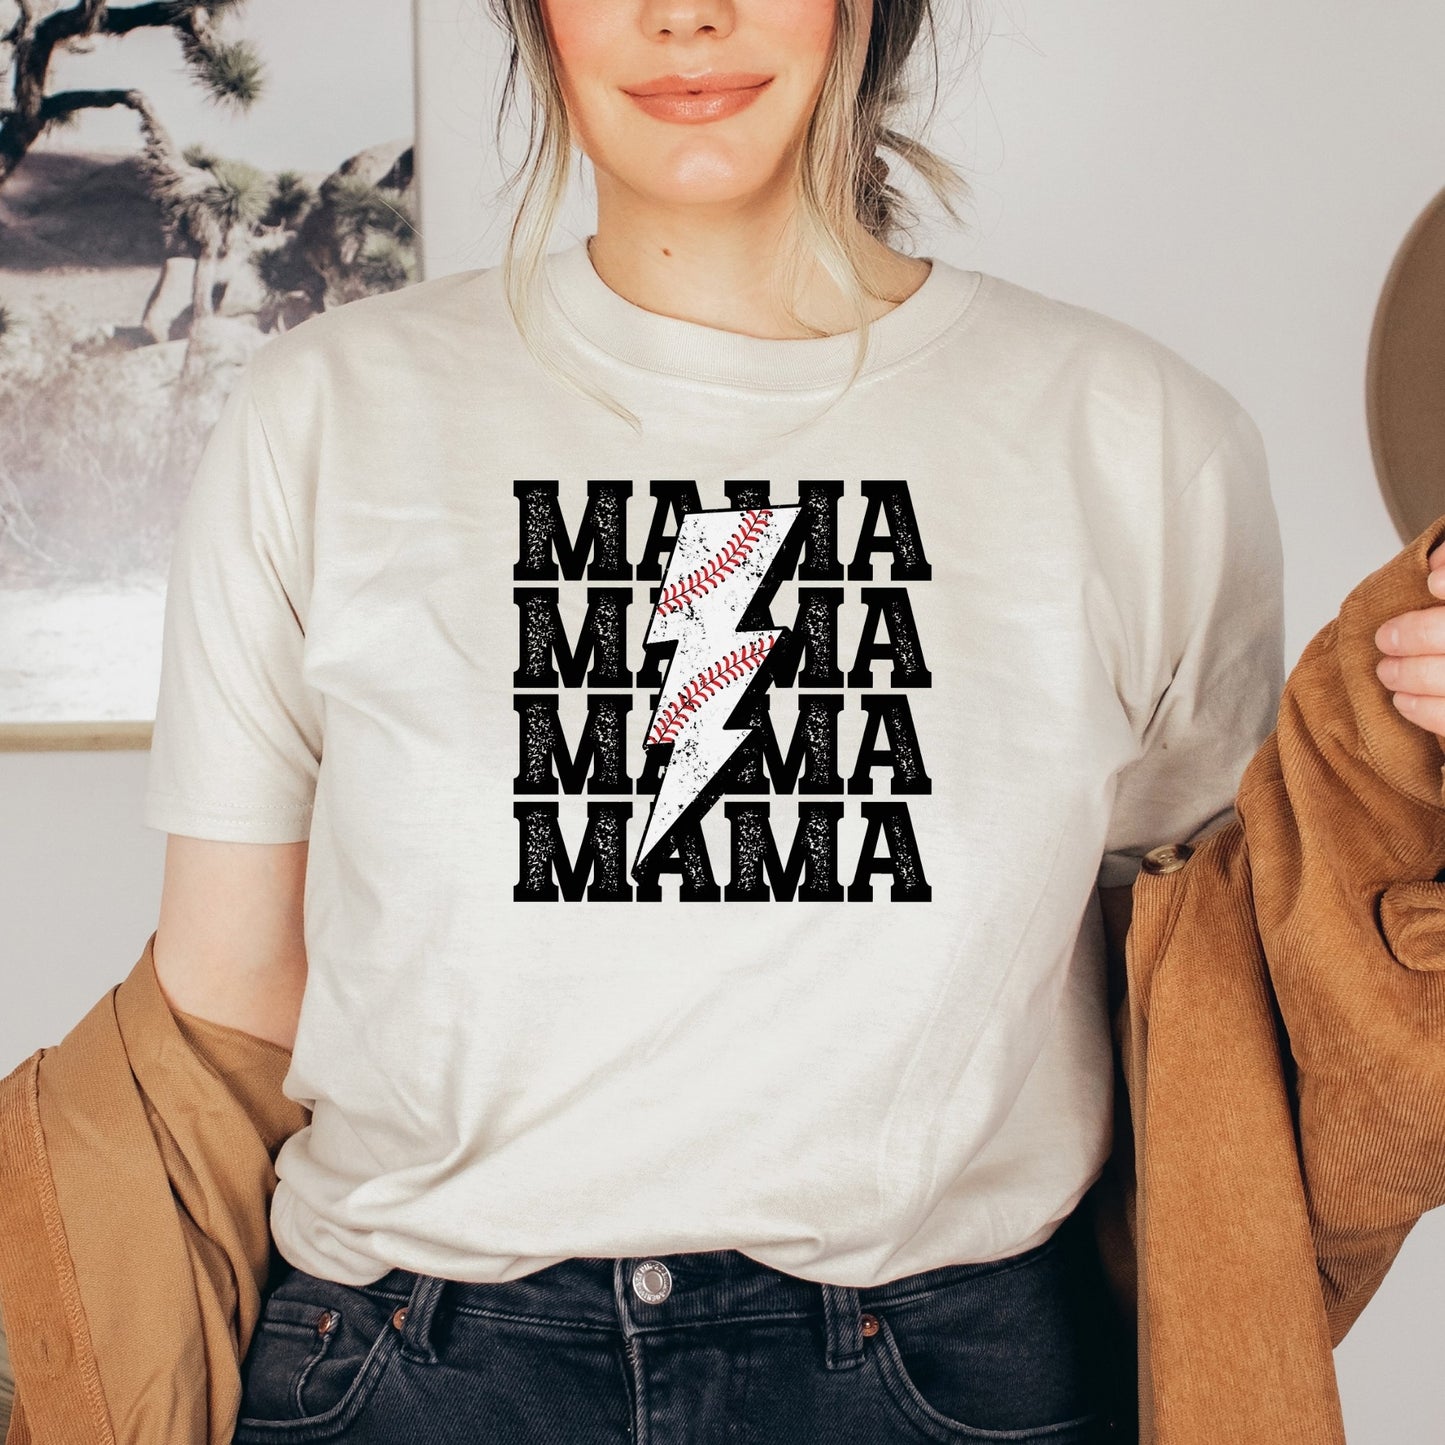 Baseball Mama Shirt